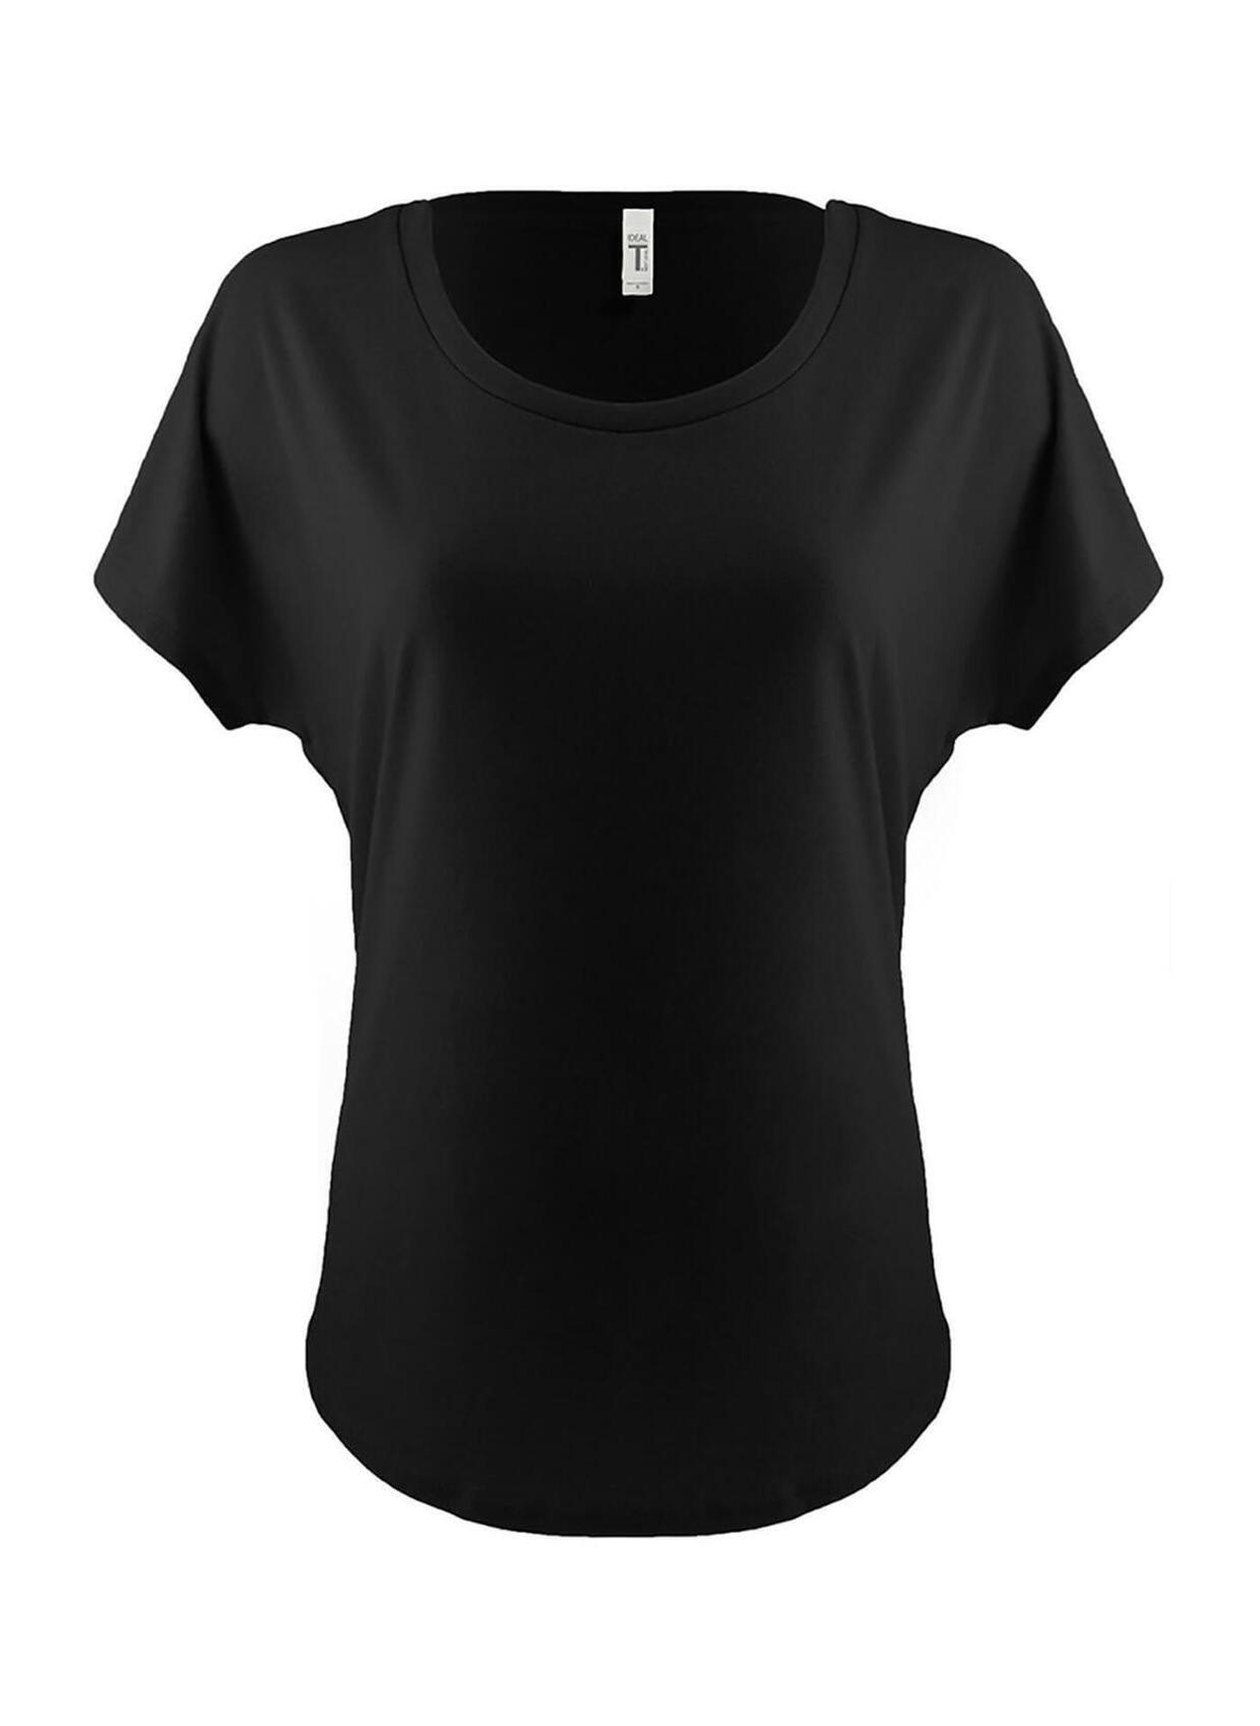 Next Level Women's Black Ideal Dolman T-Shirt